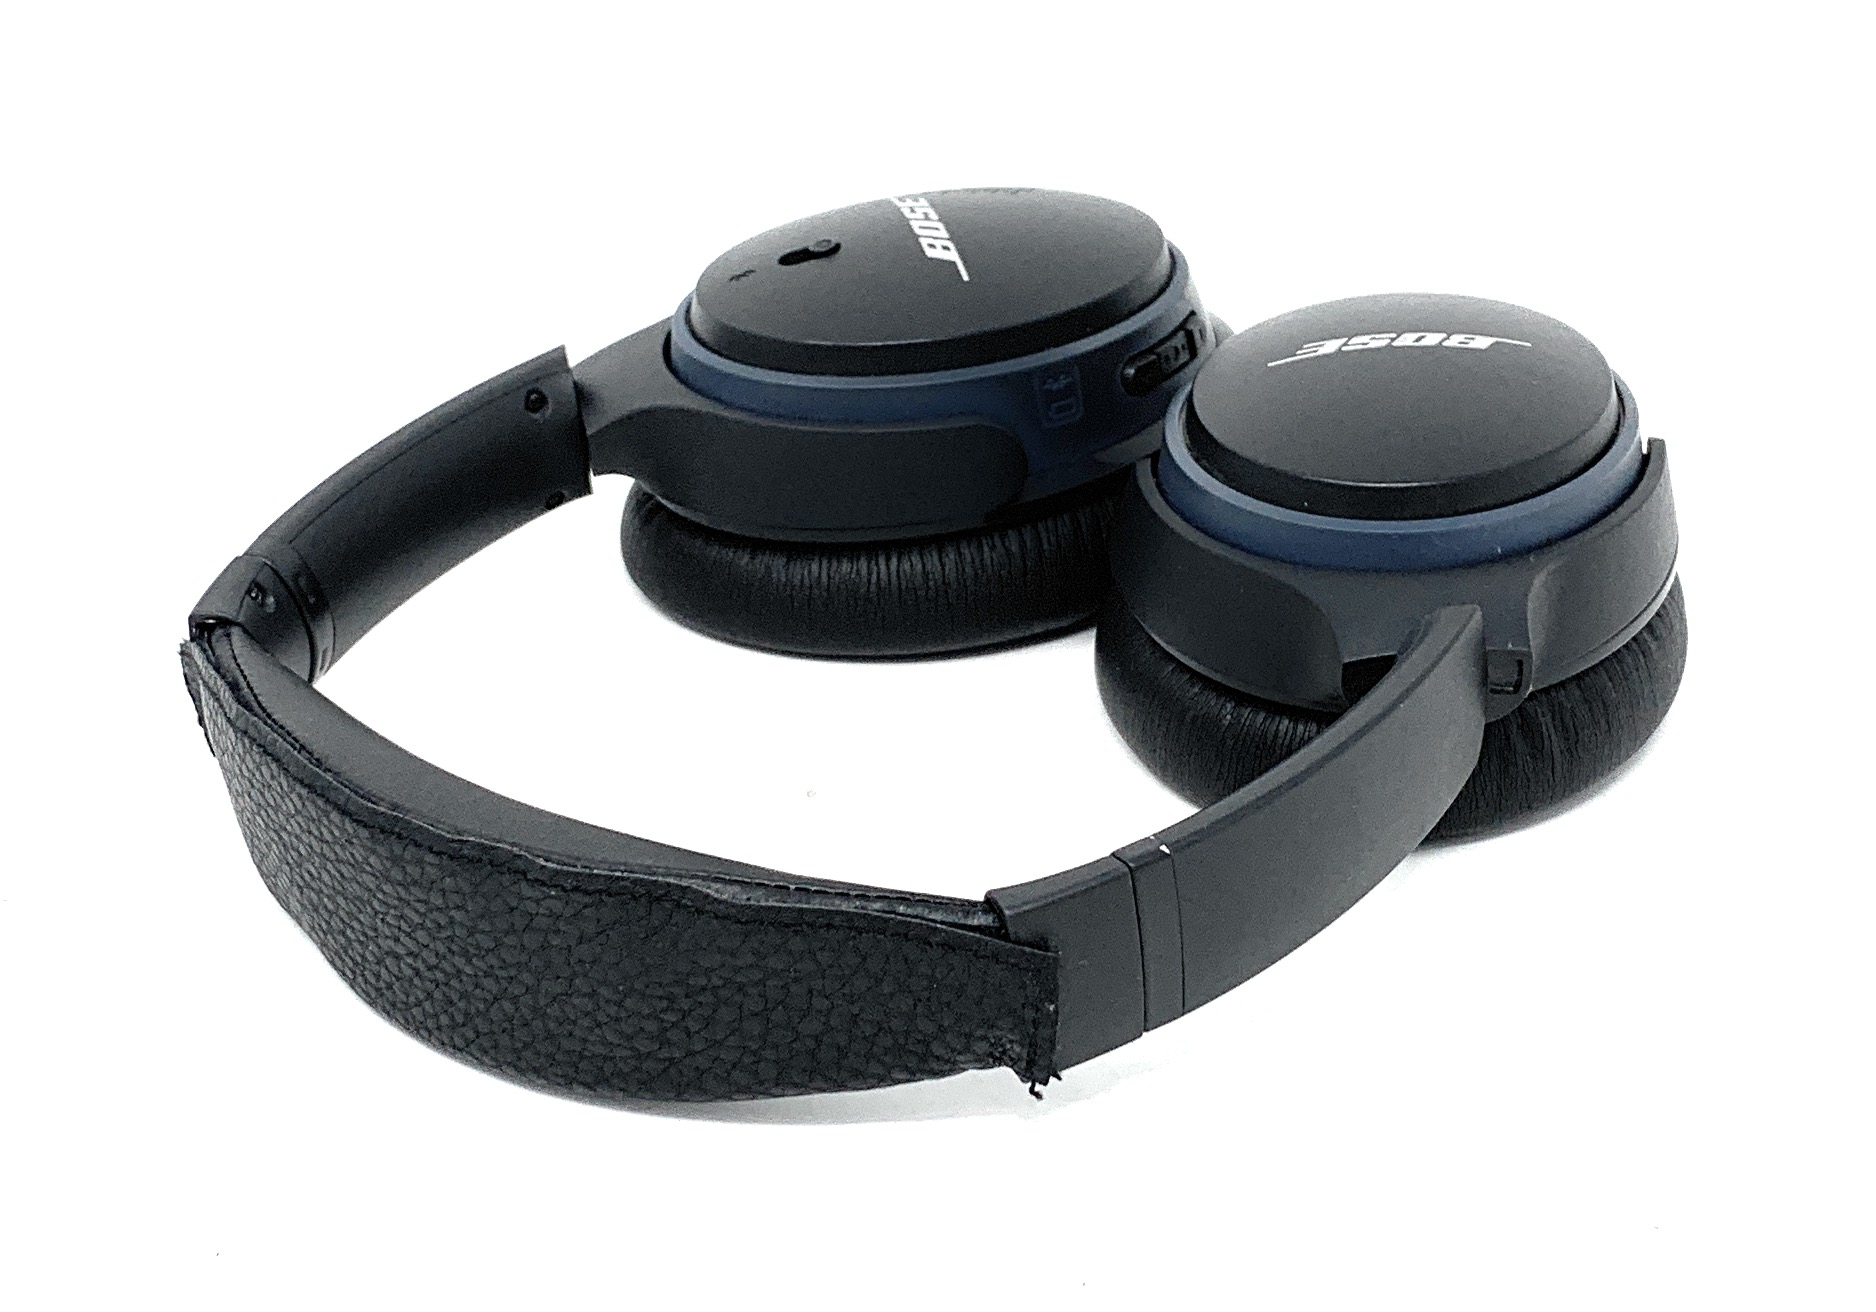 Bose Soundlink Around-Ear Wireless Headphones II – Black – Buy Any